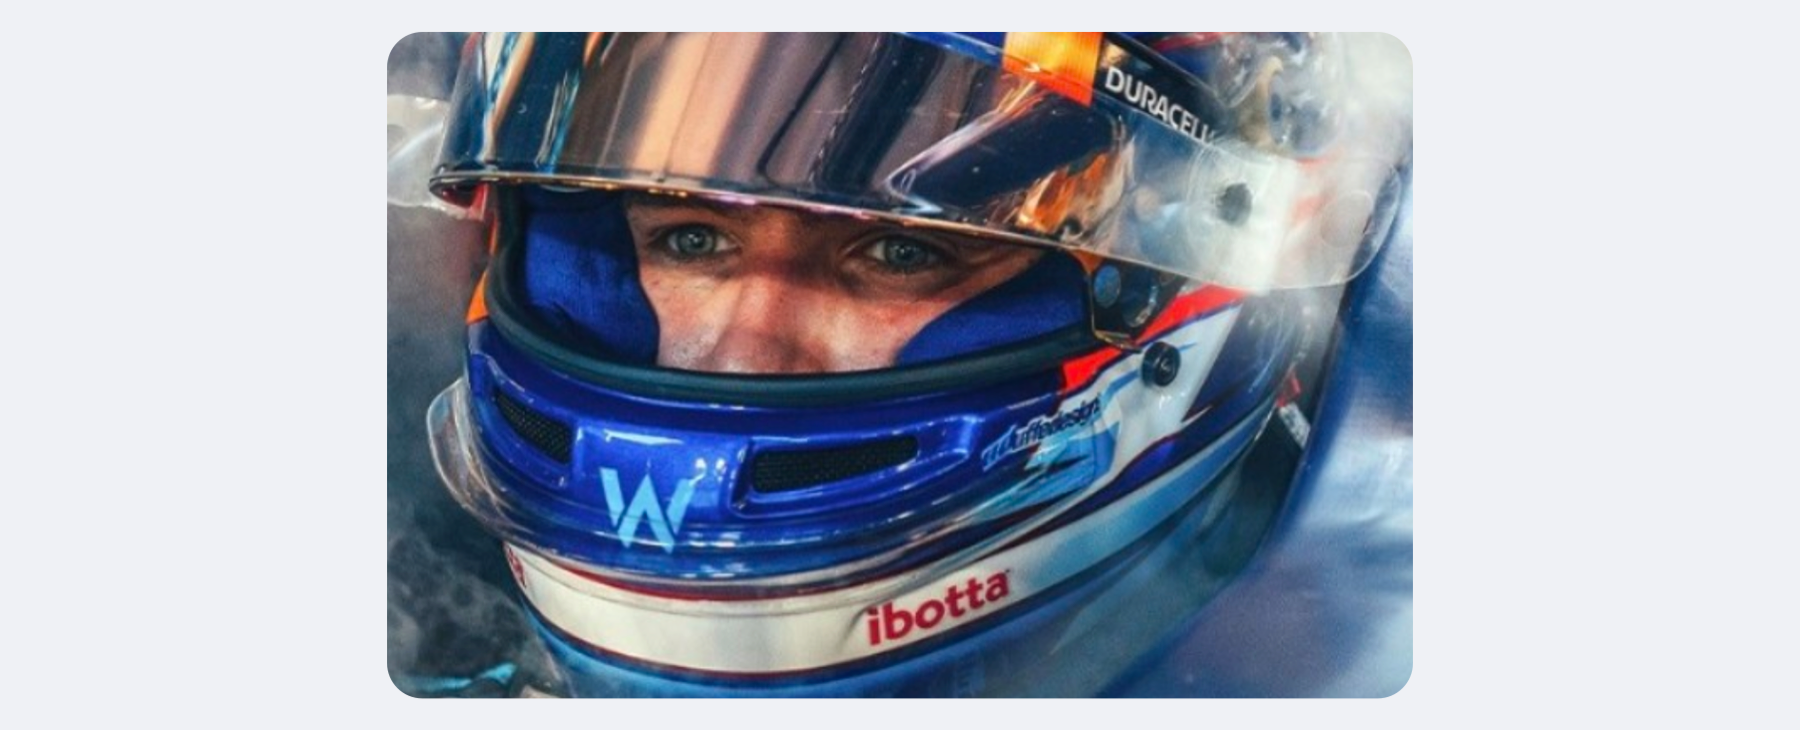 Ibotta Becomes the First Brand Sponsor of Debut Formula 1 Driver, Logan Sargeant